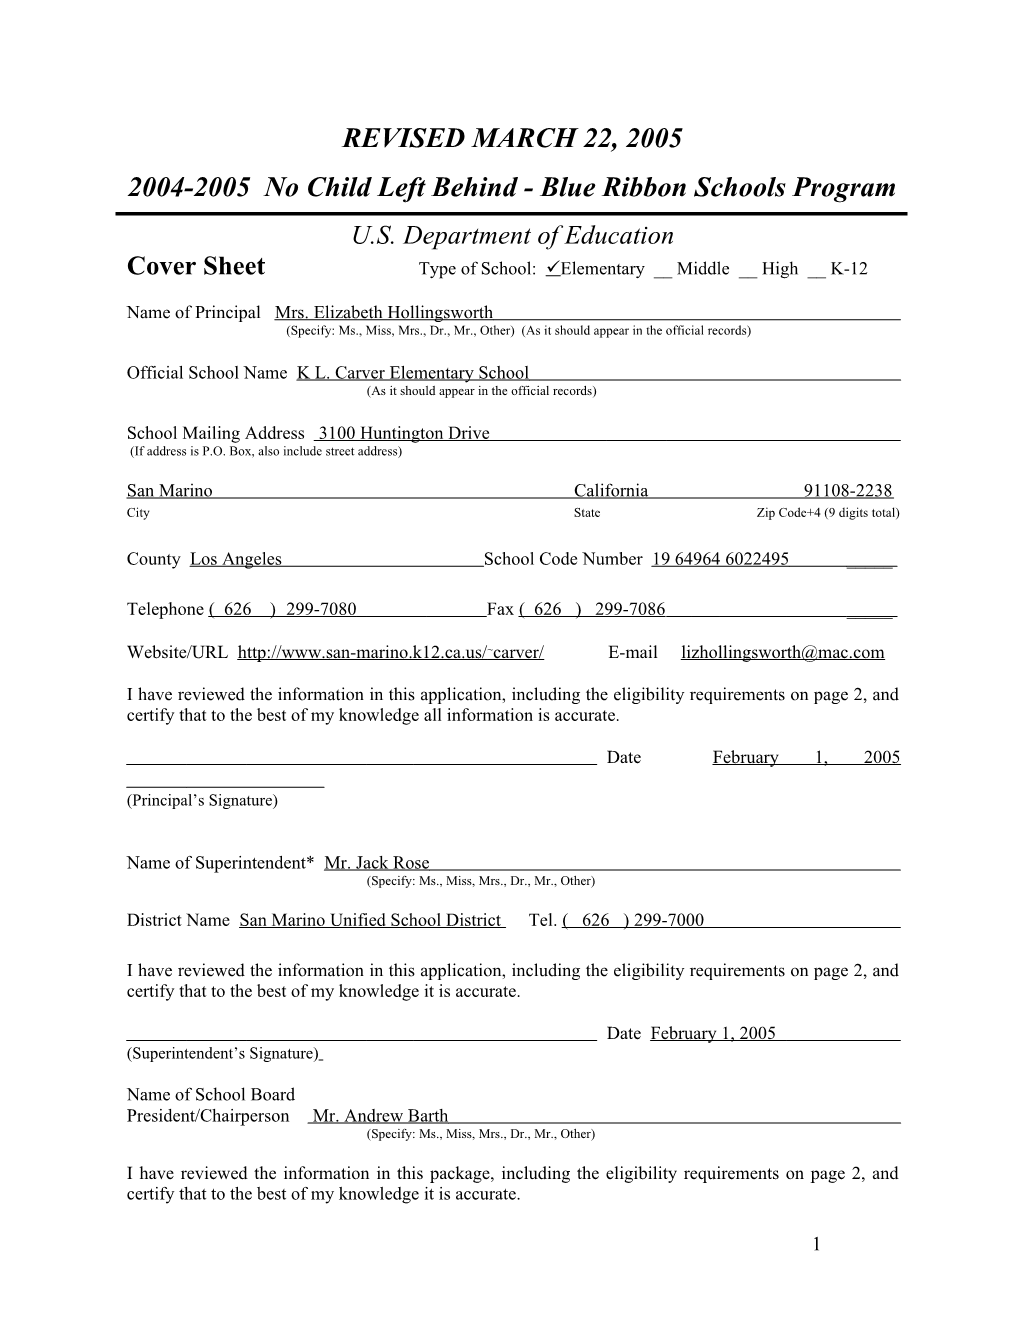 K. L. Carver Elementary School Application: 2004-2005, No Child Left Behind - Blue Ribbon